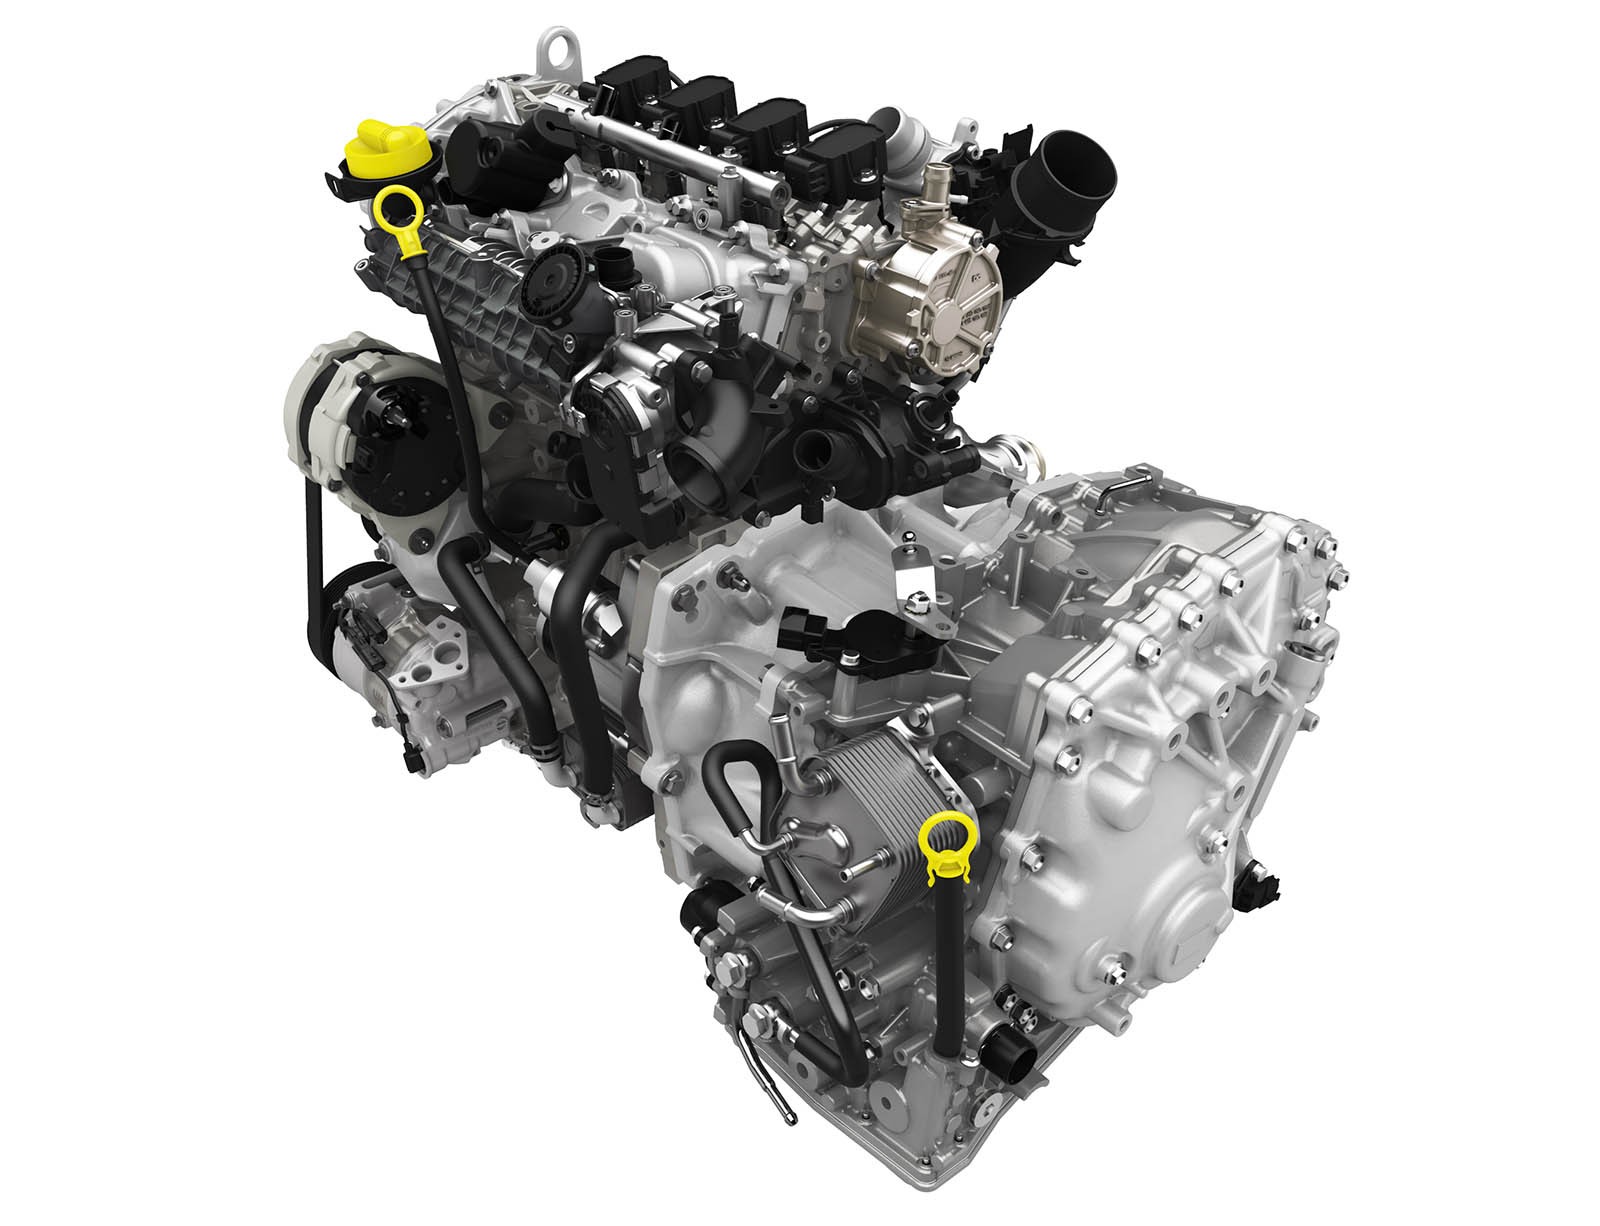 Renault arkana двигателя. Двигатель Рено Дастер 1.3 турбо. Двигатель Renault 1,3 турбо TCE 150. Двигатель h5ht 1.3 TCE. Двигатель TCE 150 Рено.